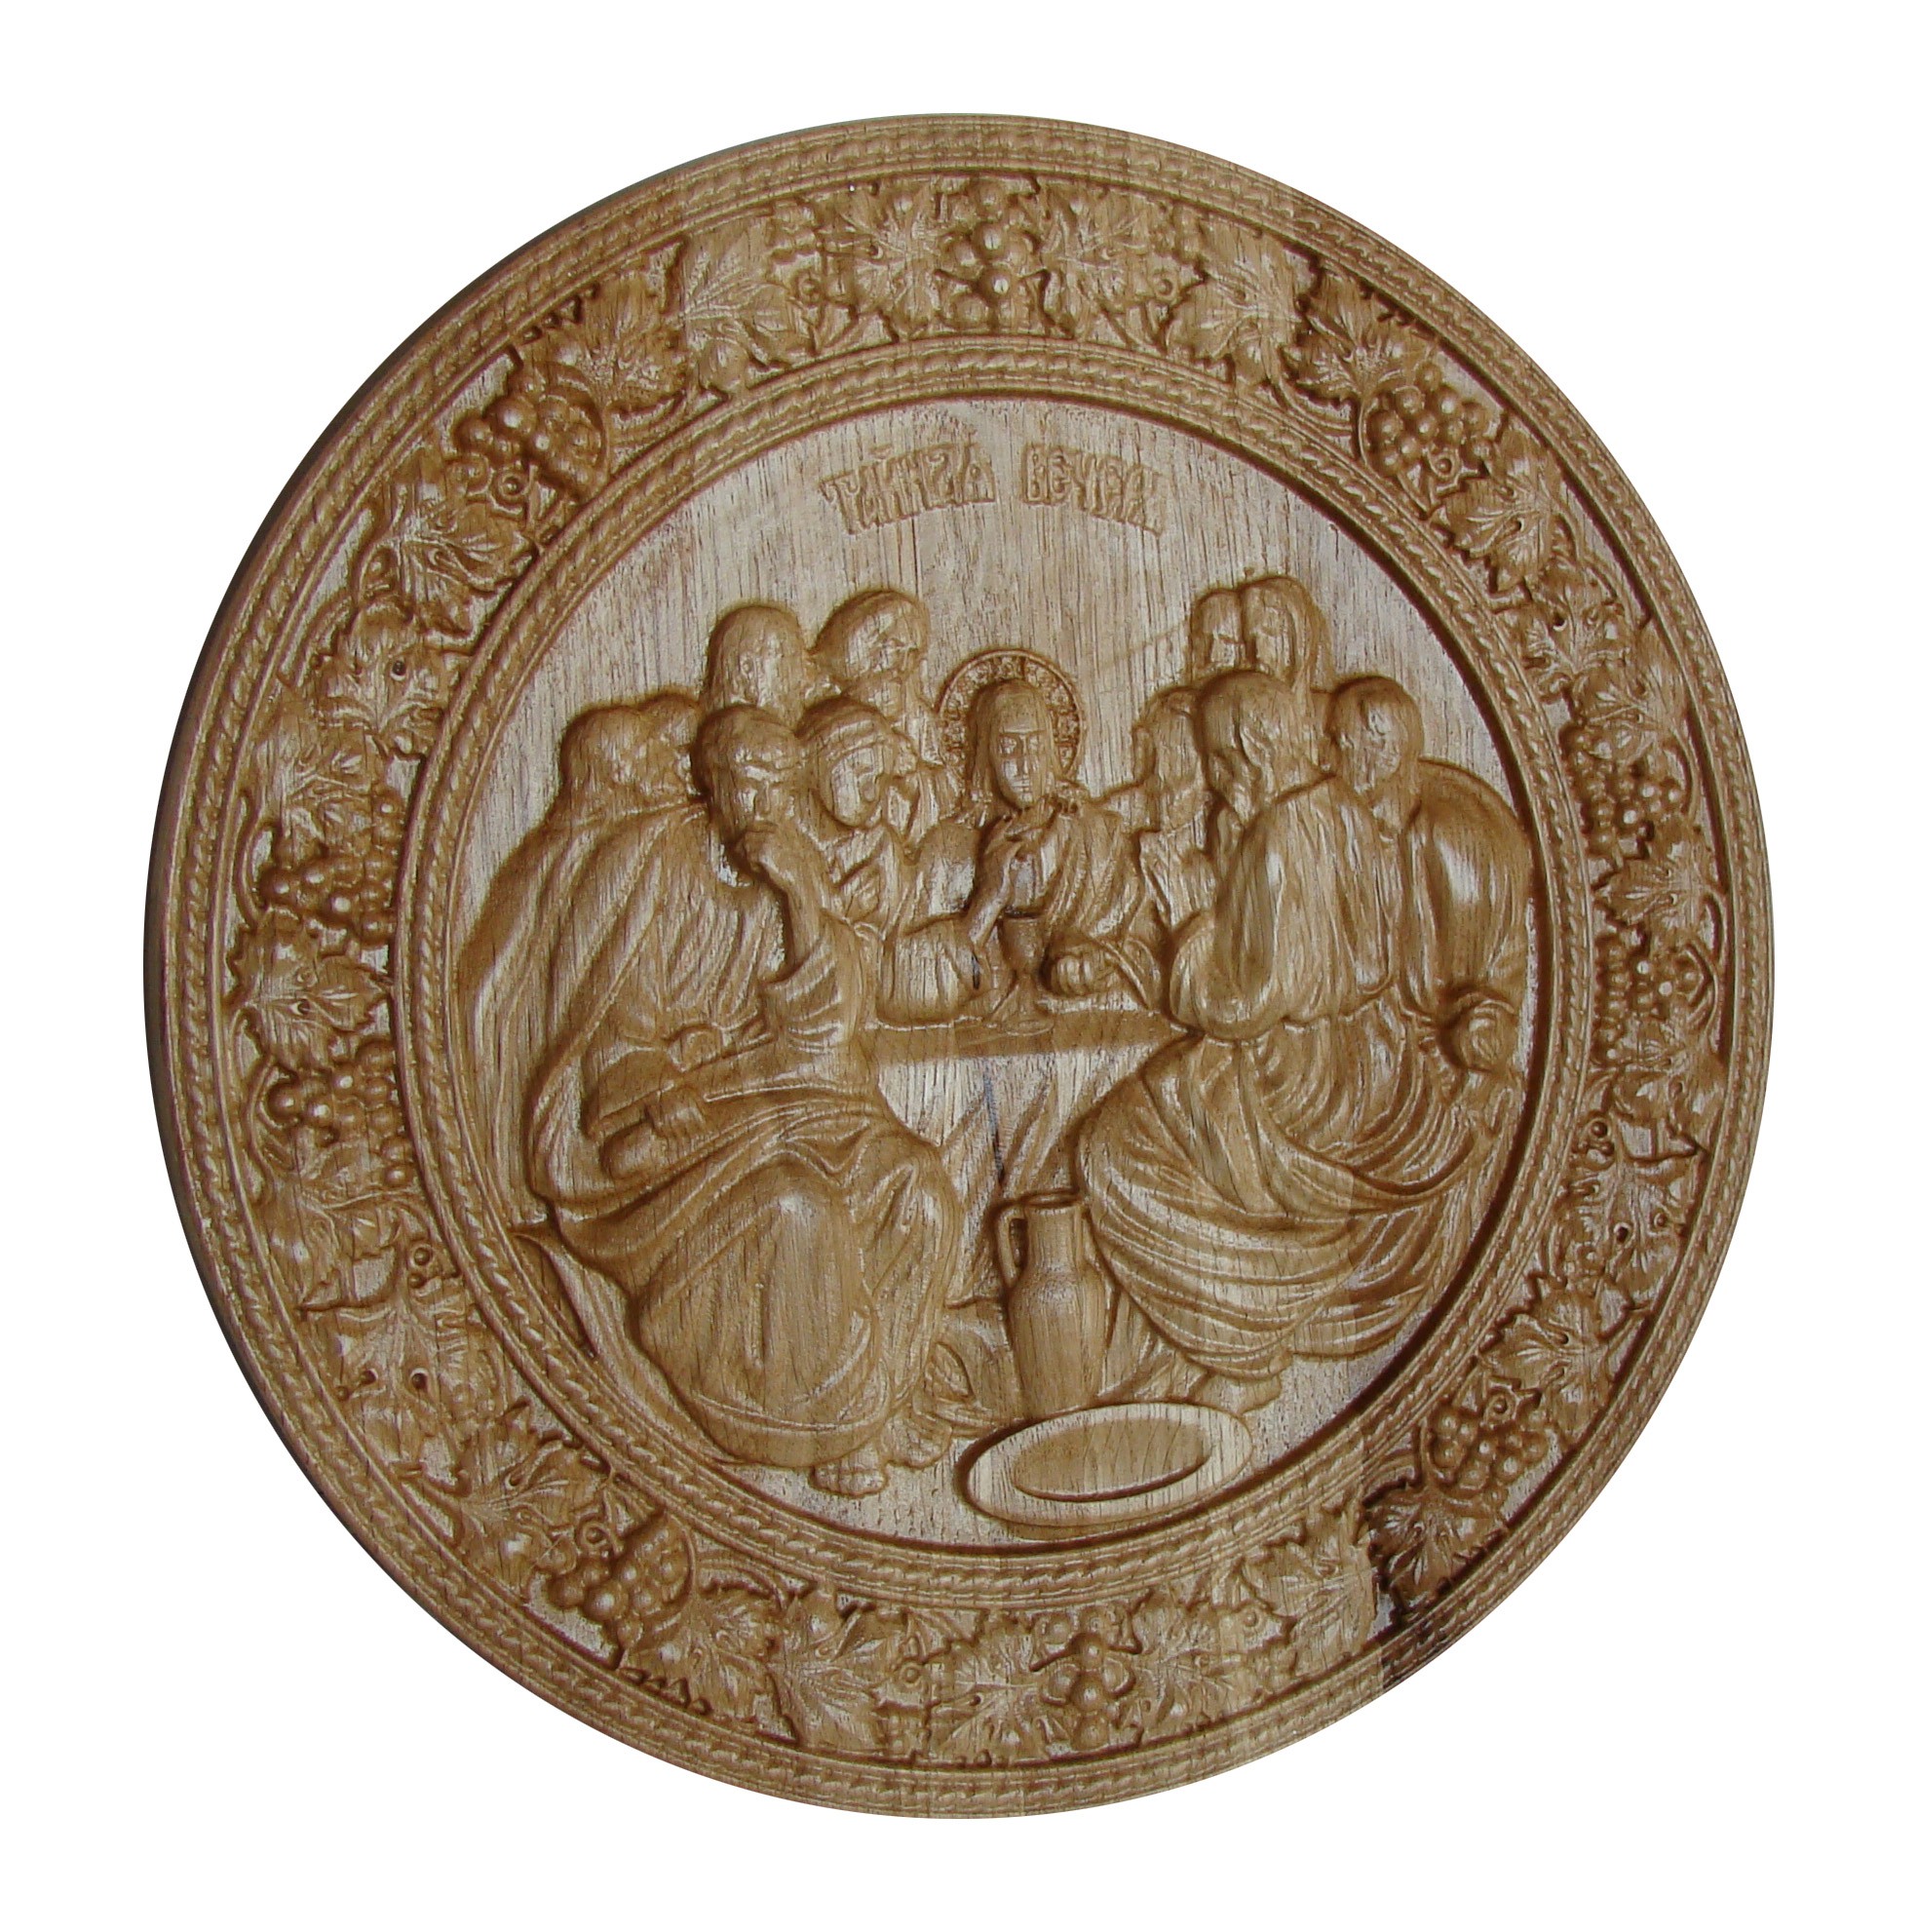 Icoana sculptata Cina cea de Taina, lemn masiv, rama circulara vita-de-vie, diametru 26 cm